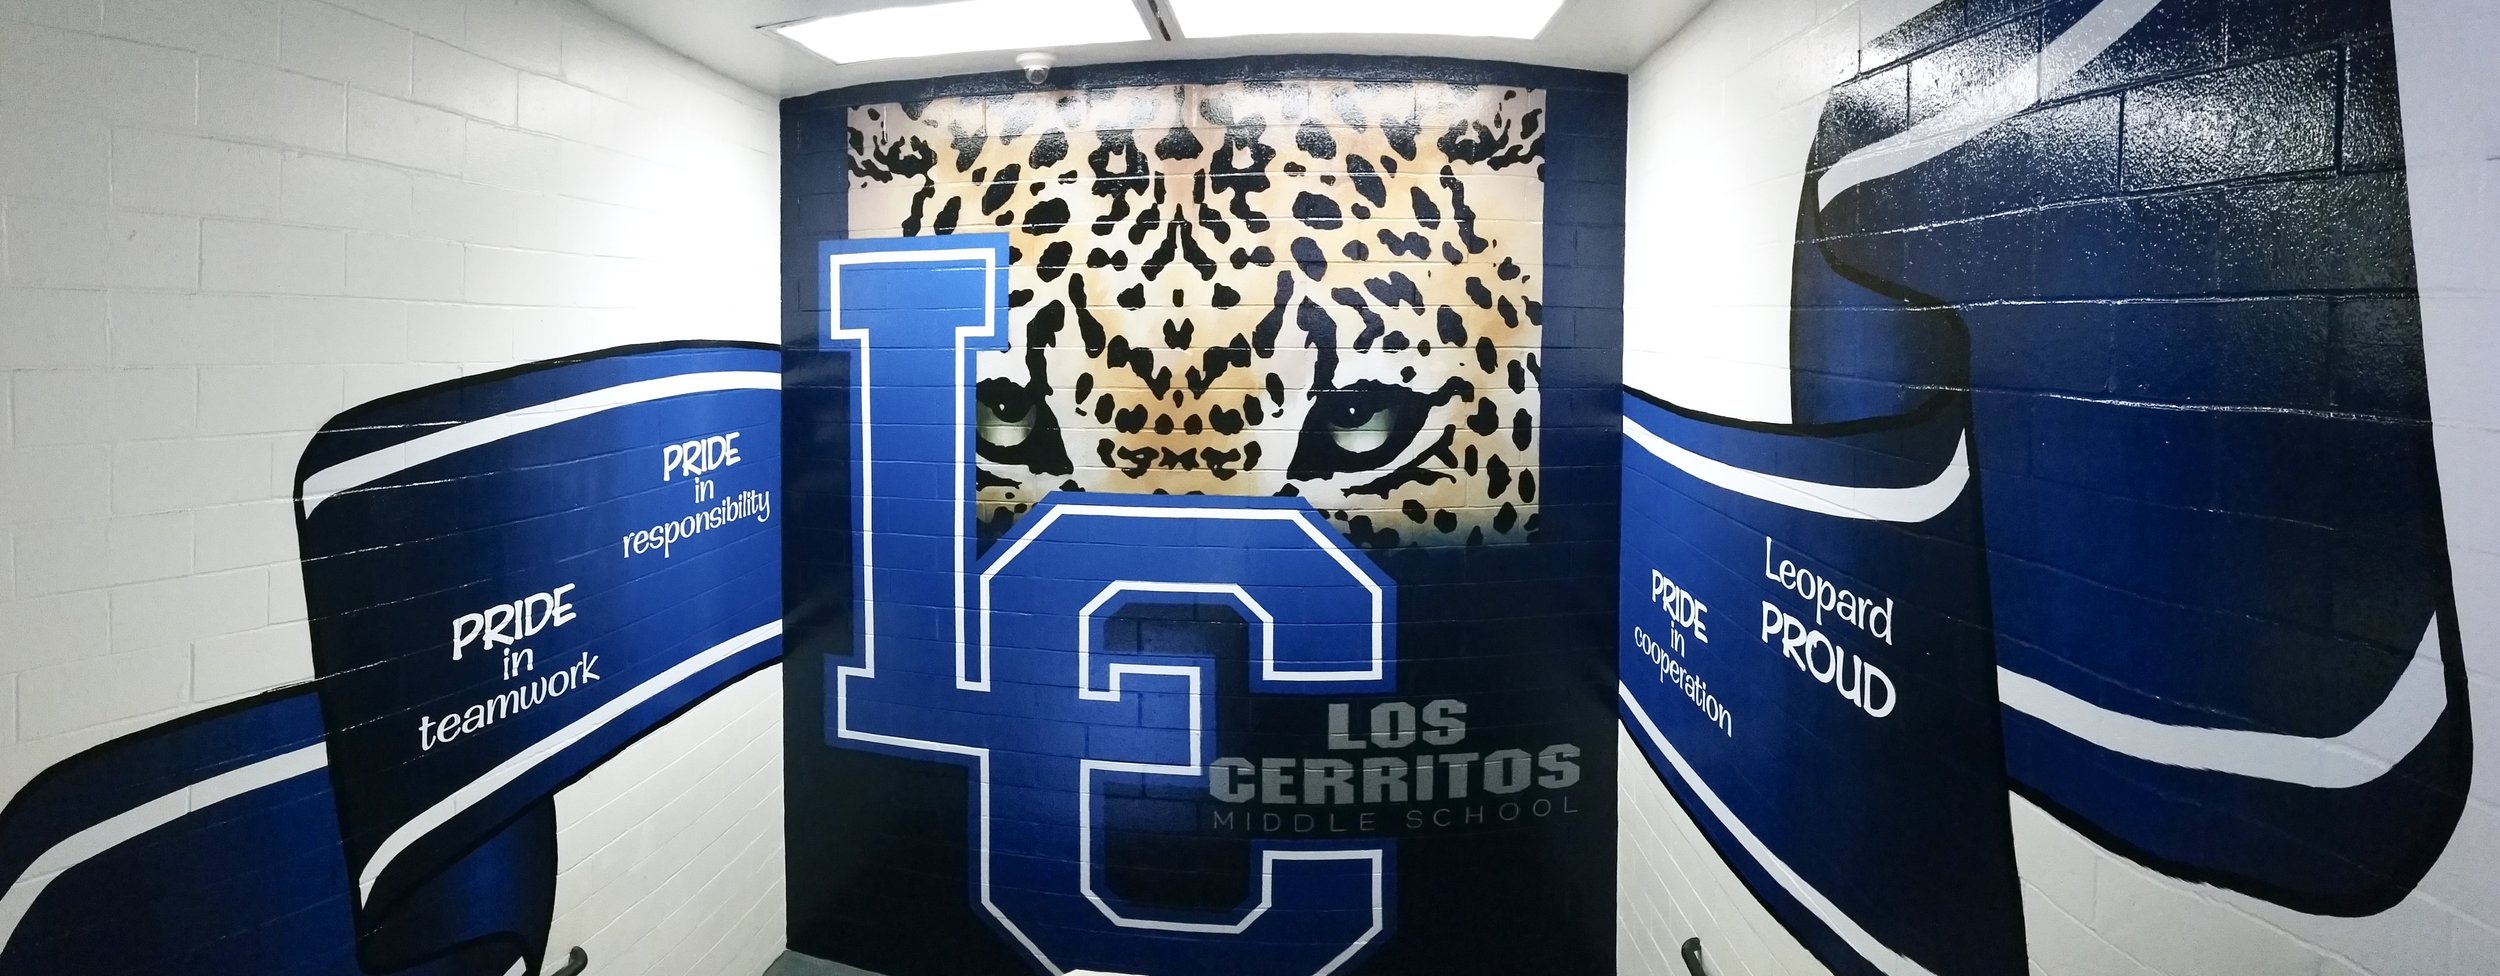 Los Cerritos Middle School hand painted mural - stair 2